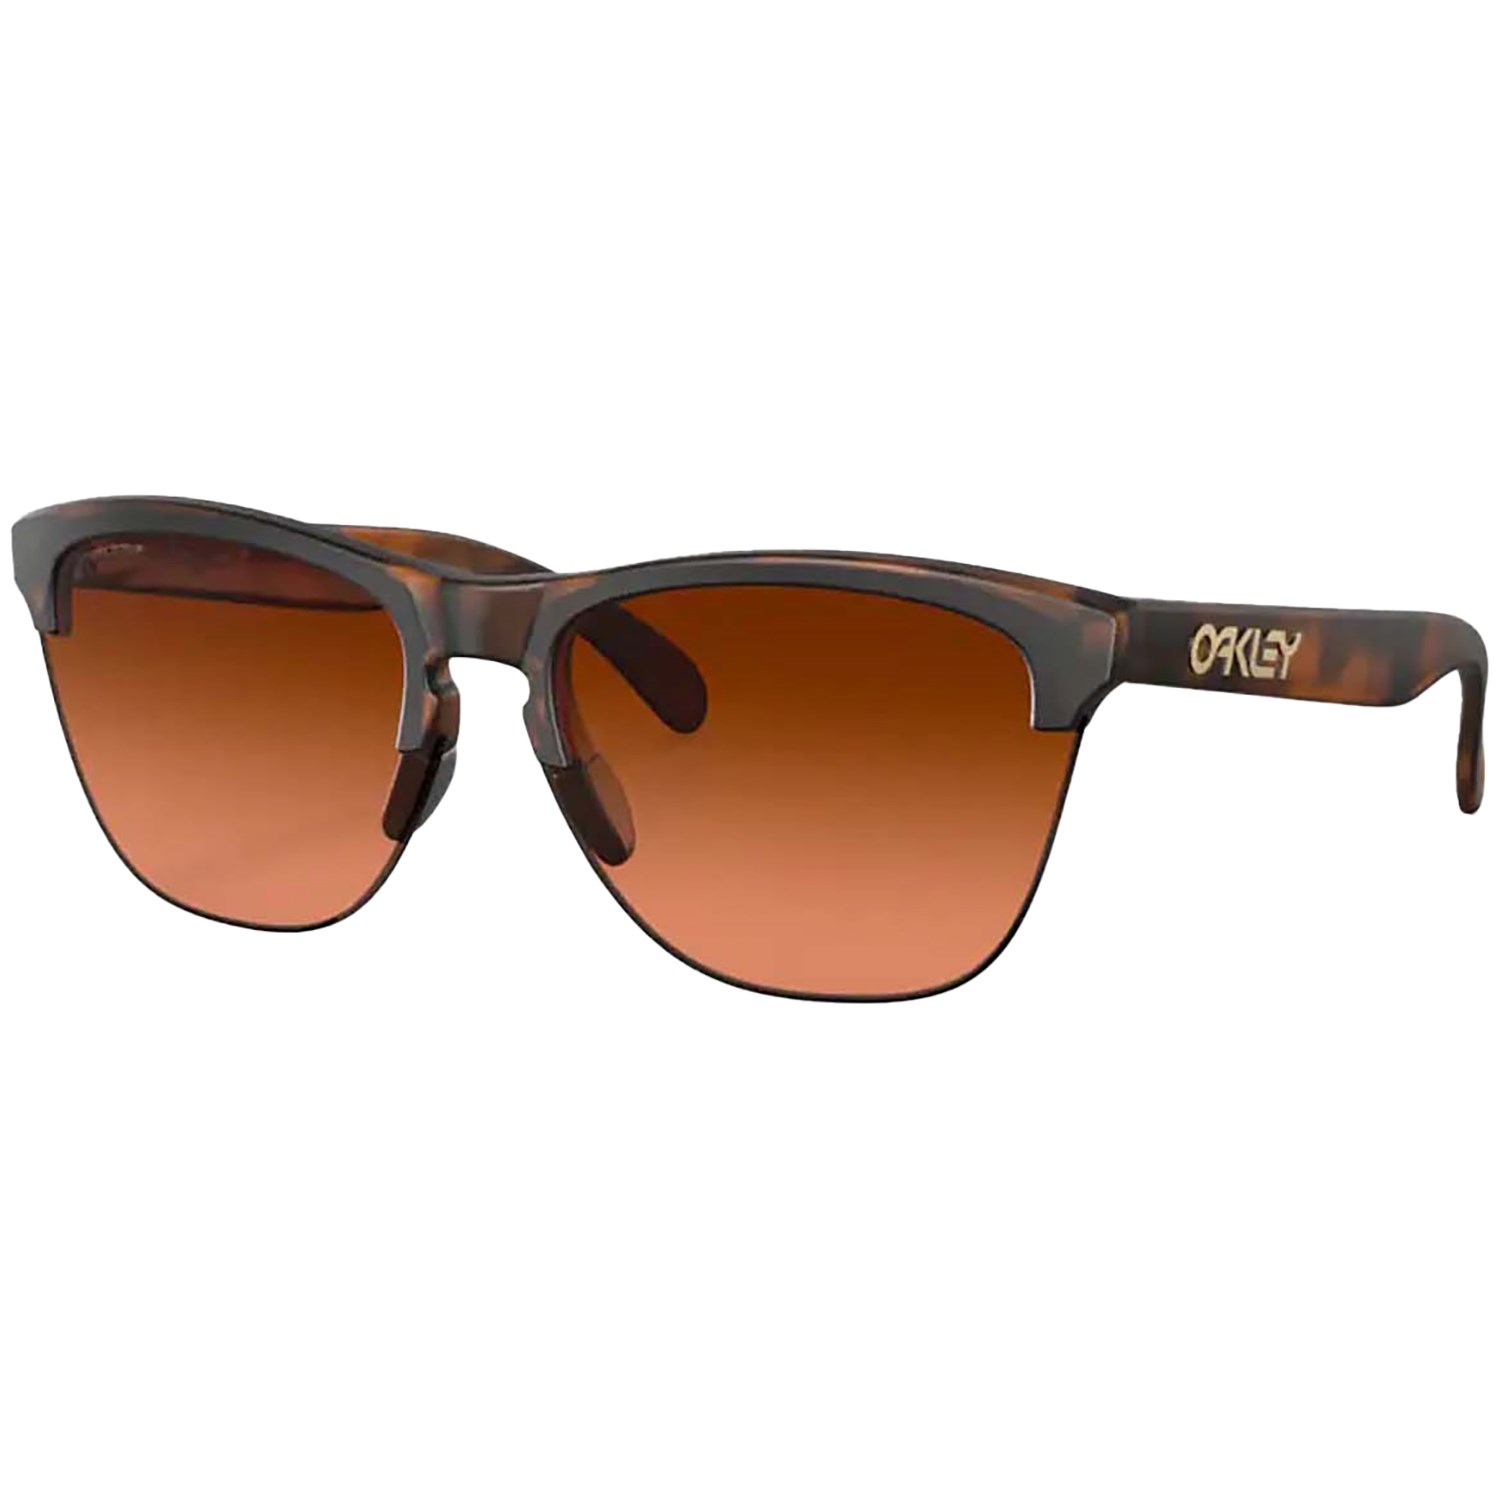 Oakley Frogskins Polarized Sunglasses - Men's Sunglasses & Glasses in Green  Fade | Buckle